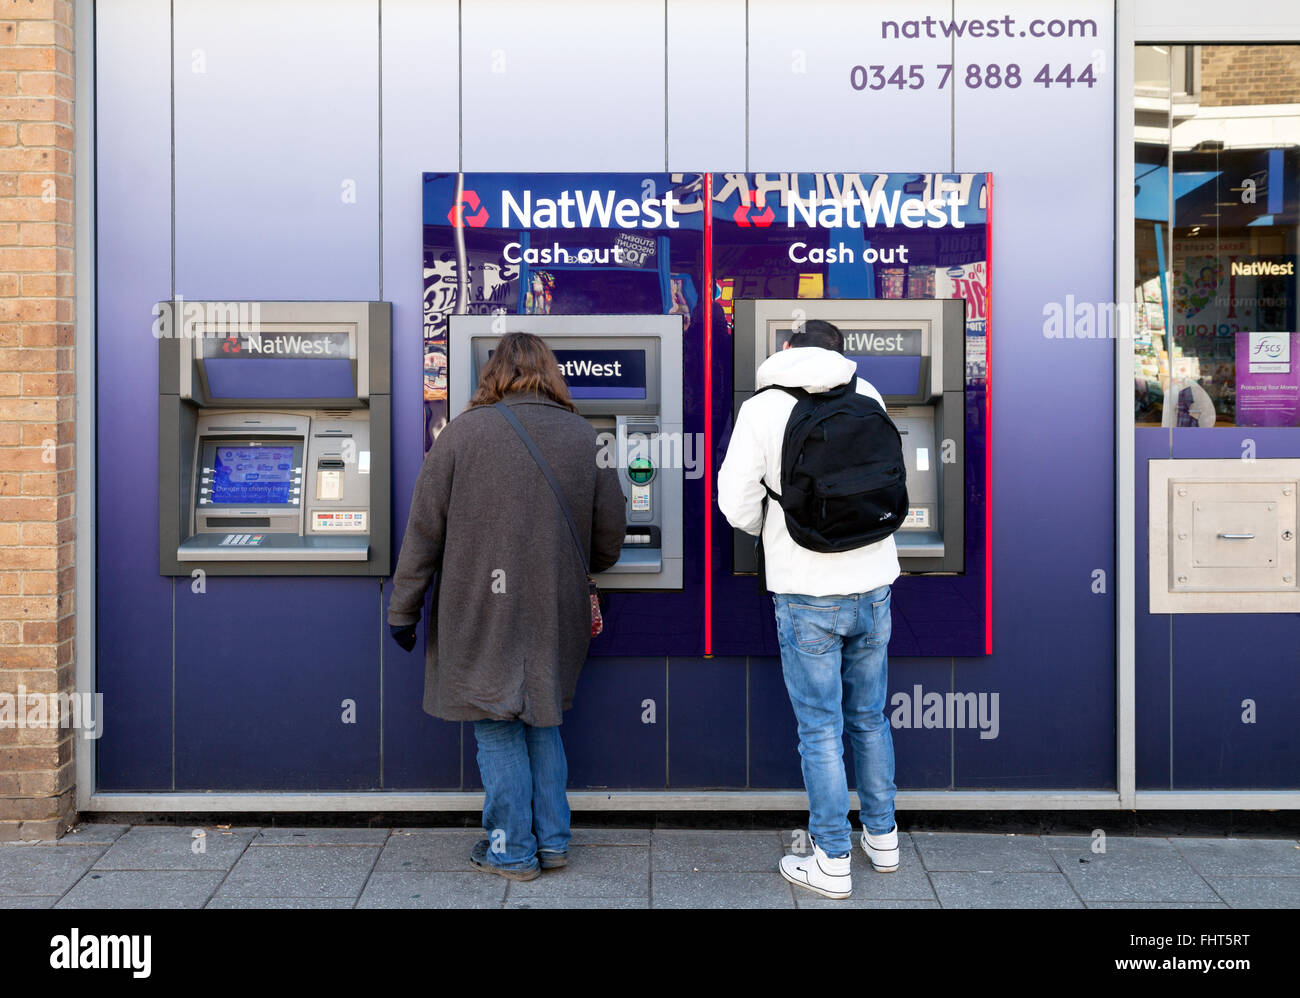 People using the ATM, Natwest Bank, Burleigh Street, Cambridge UK Stock Photo